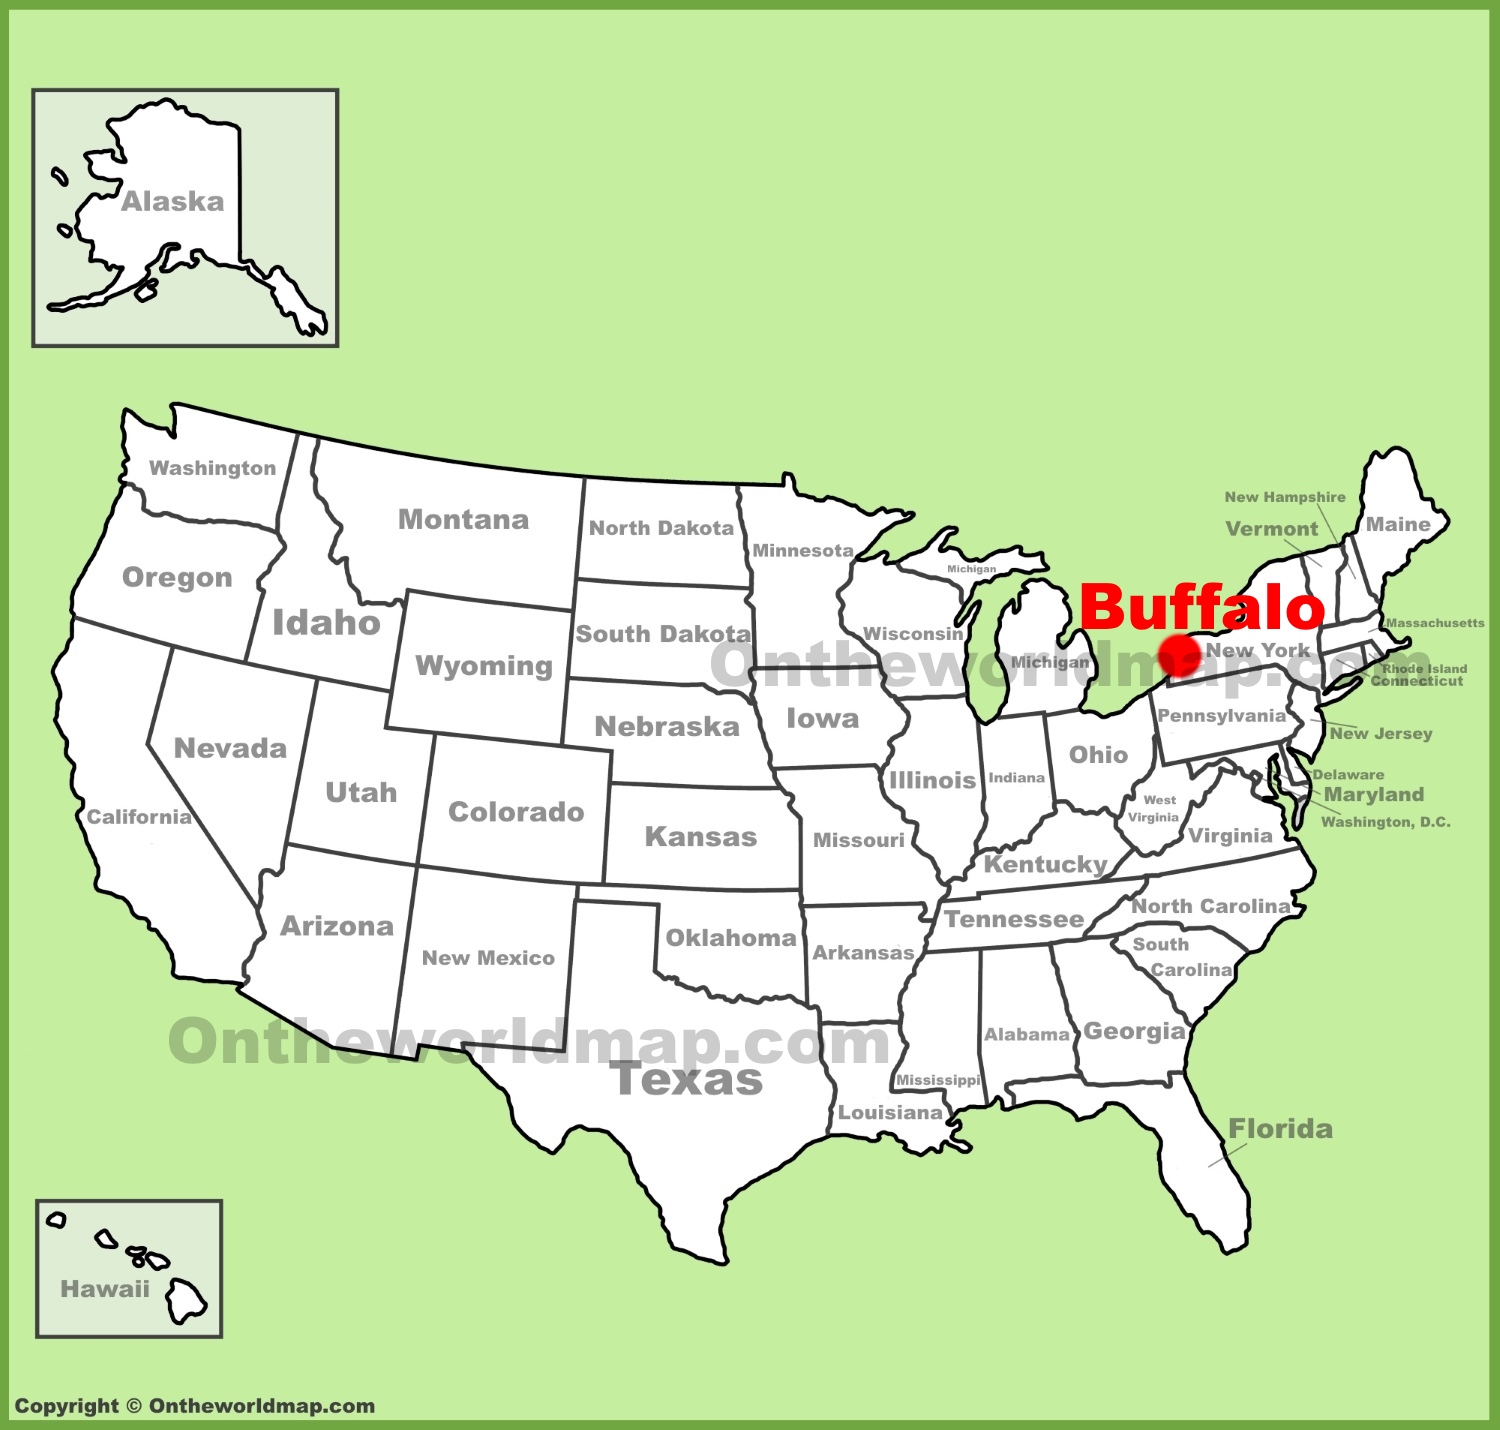 Buffalo location on the U.S. Map